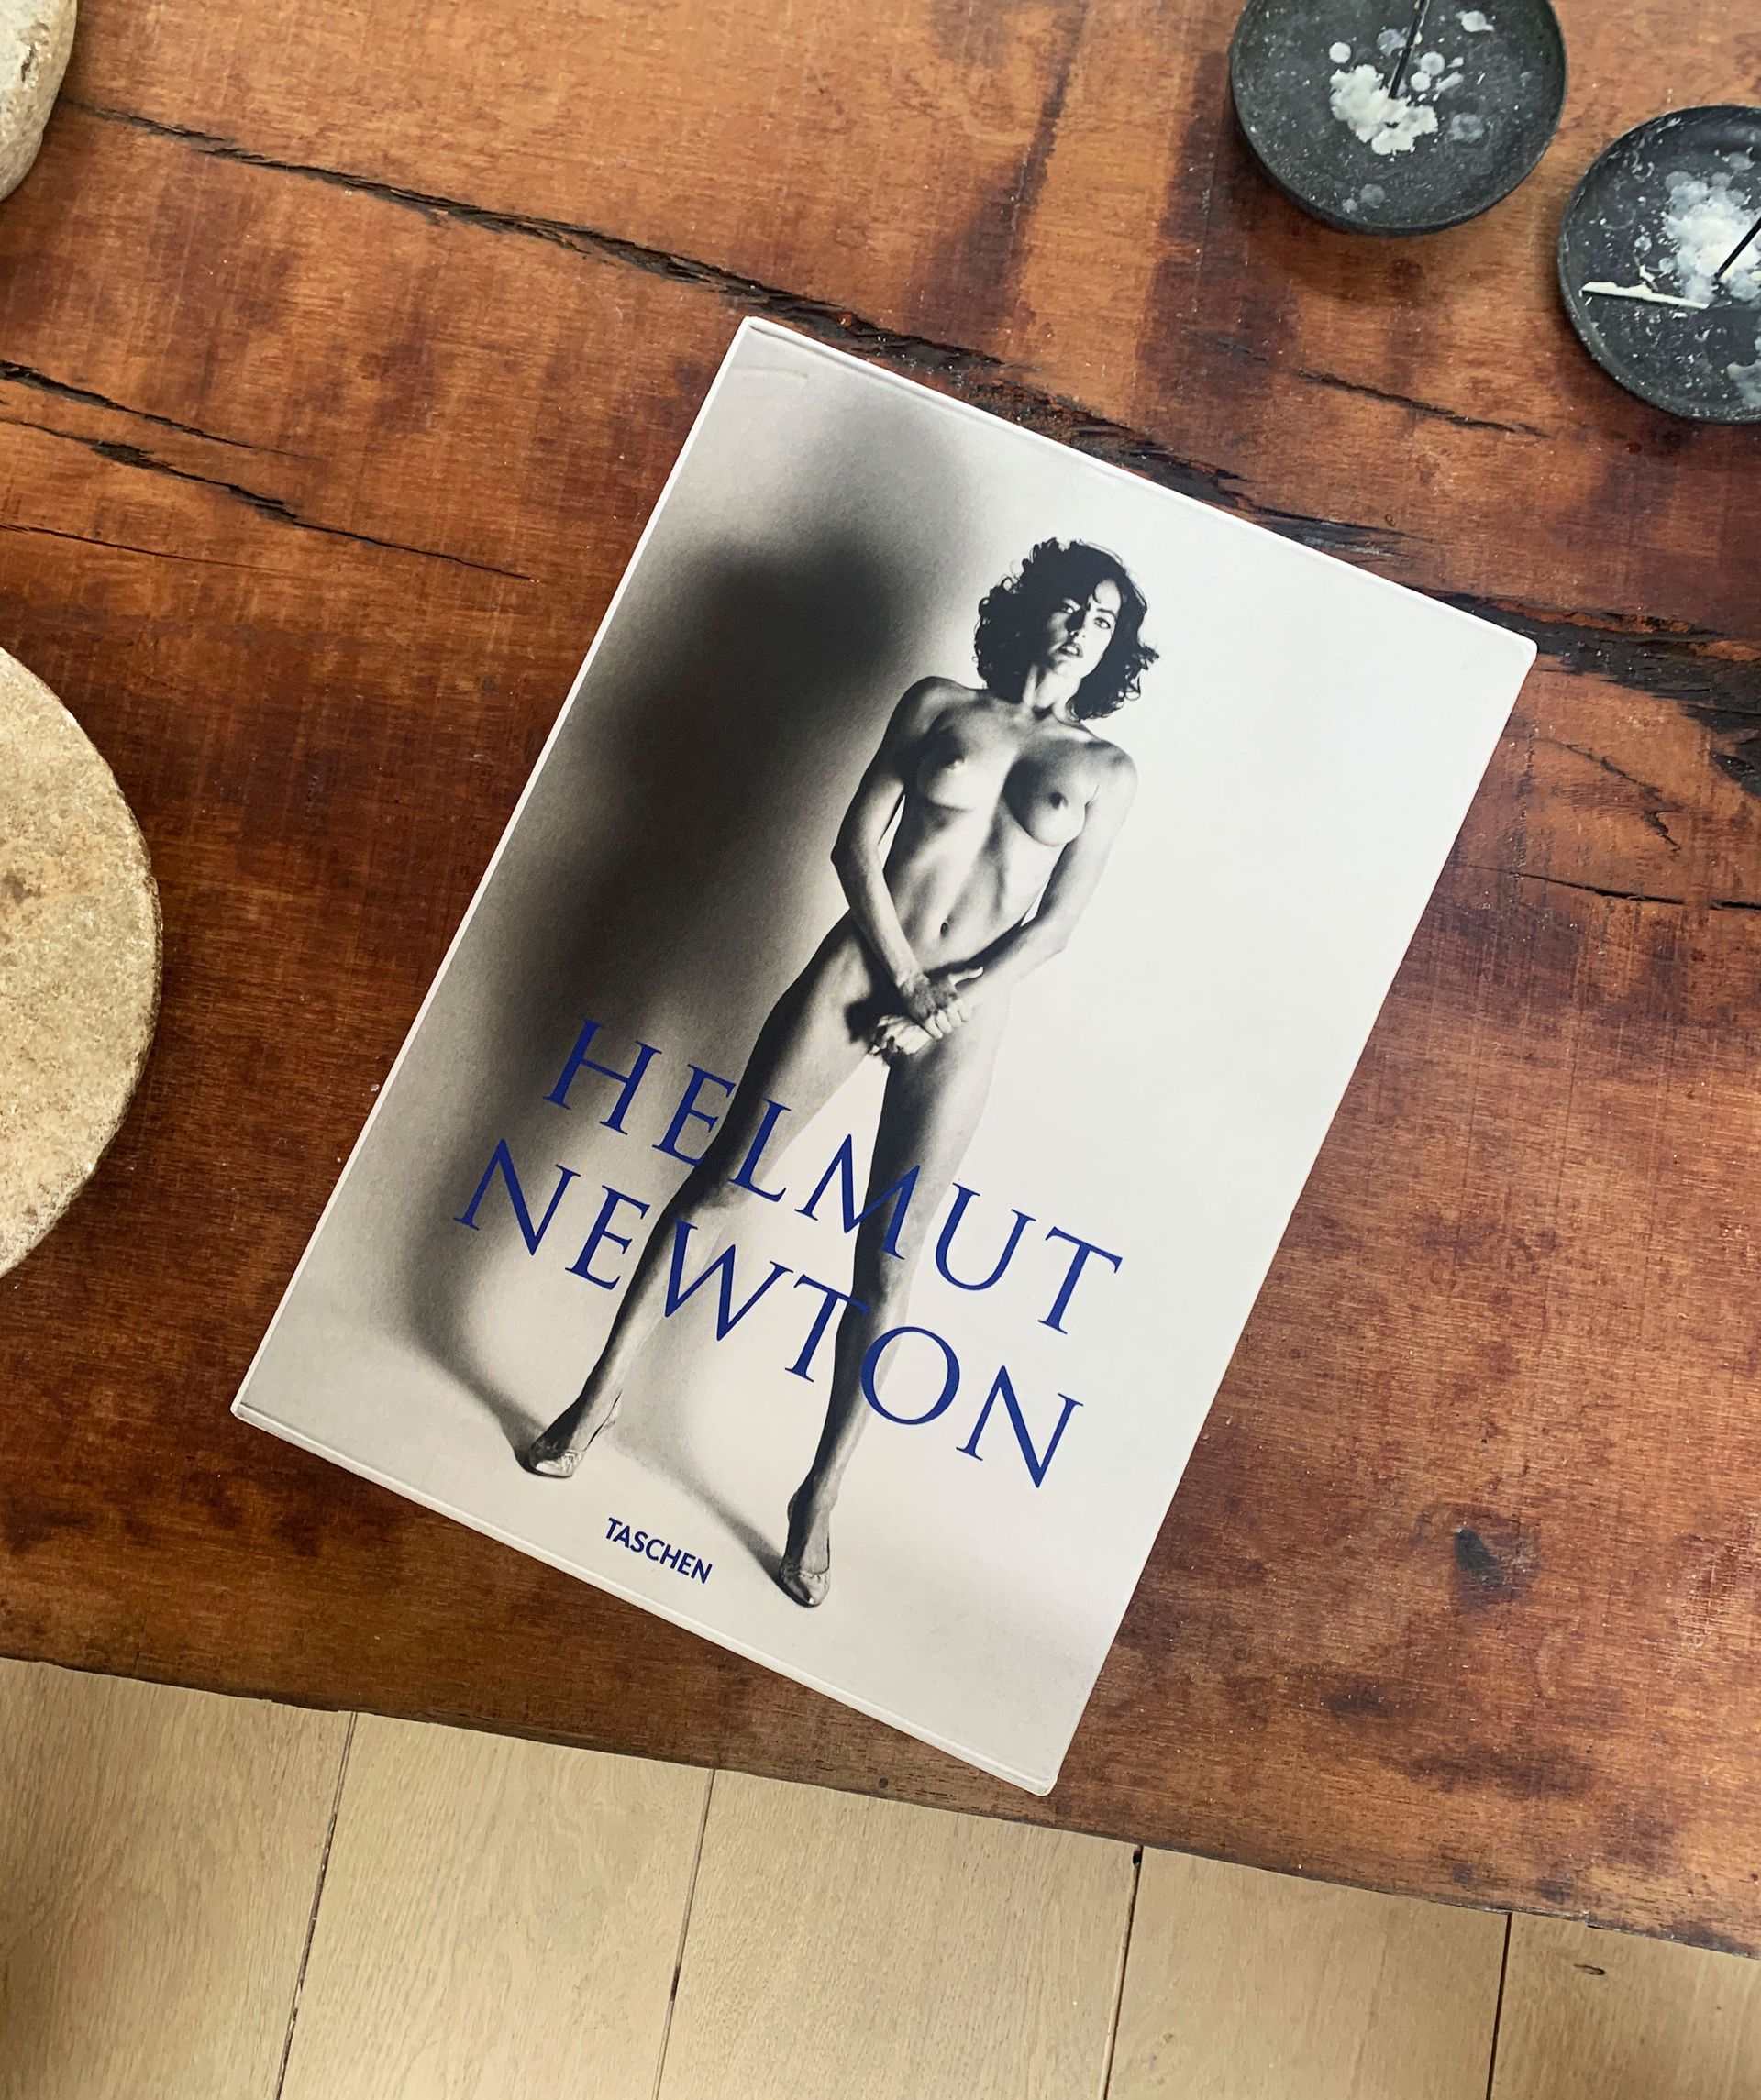 Helmut Newton coffee table book